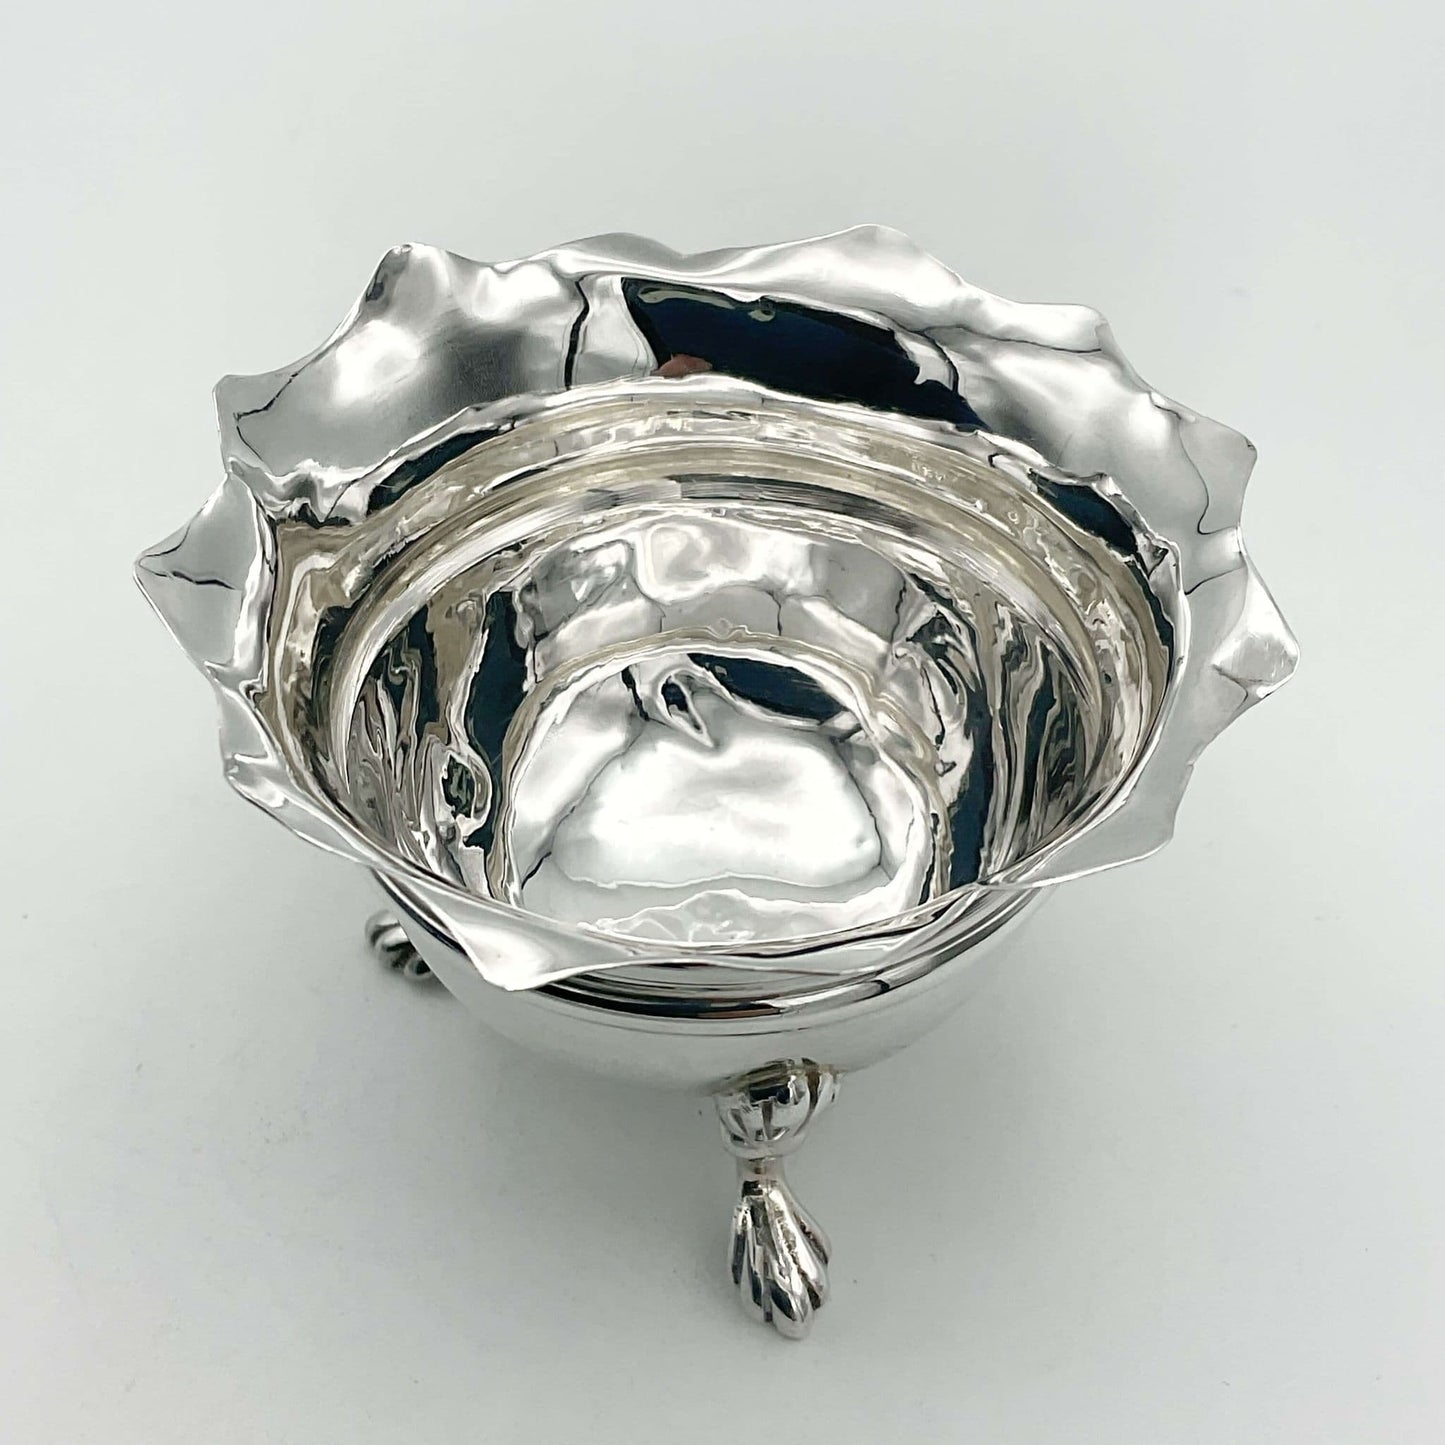 Antique Sterling Silver Salt, 1901 Hallmark, Small Silver Bowl